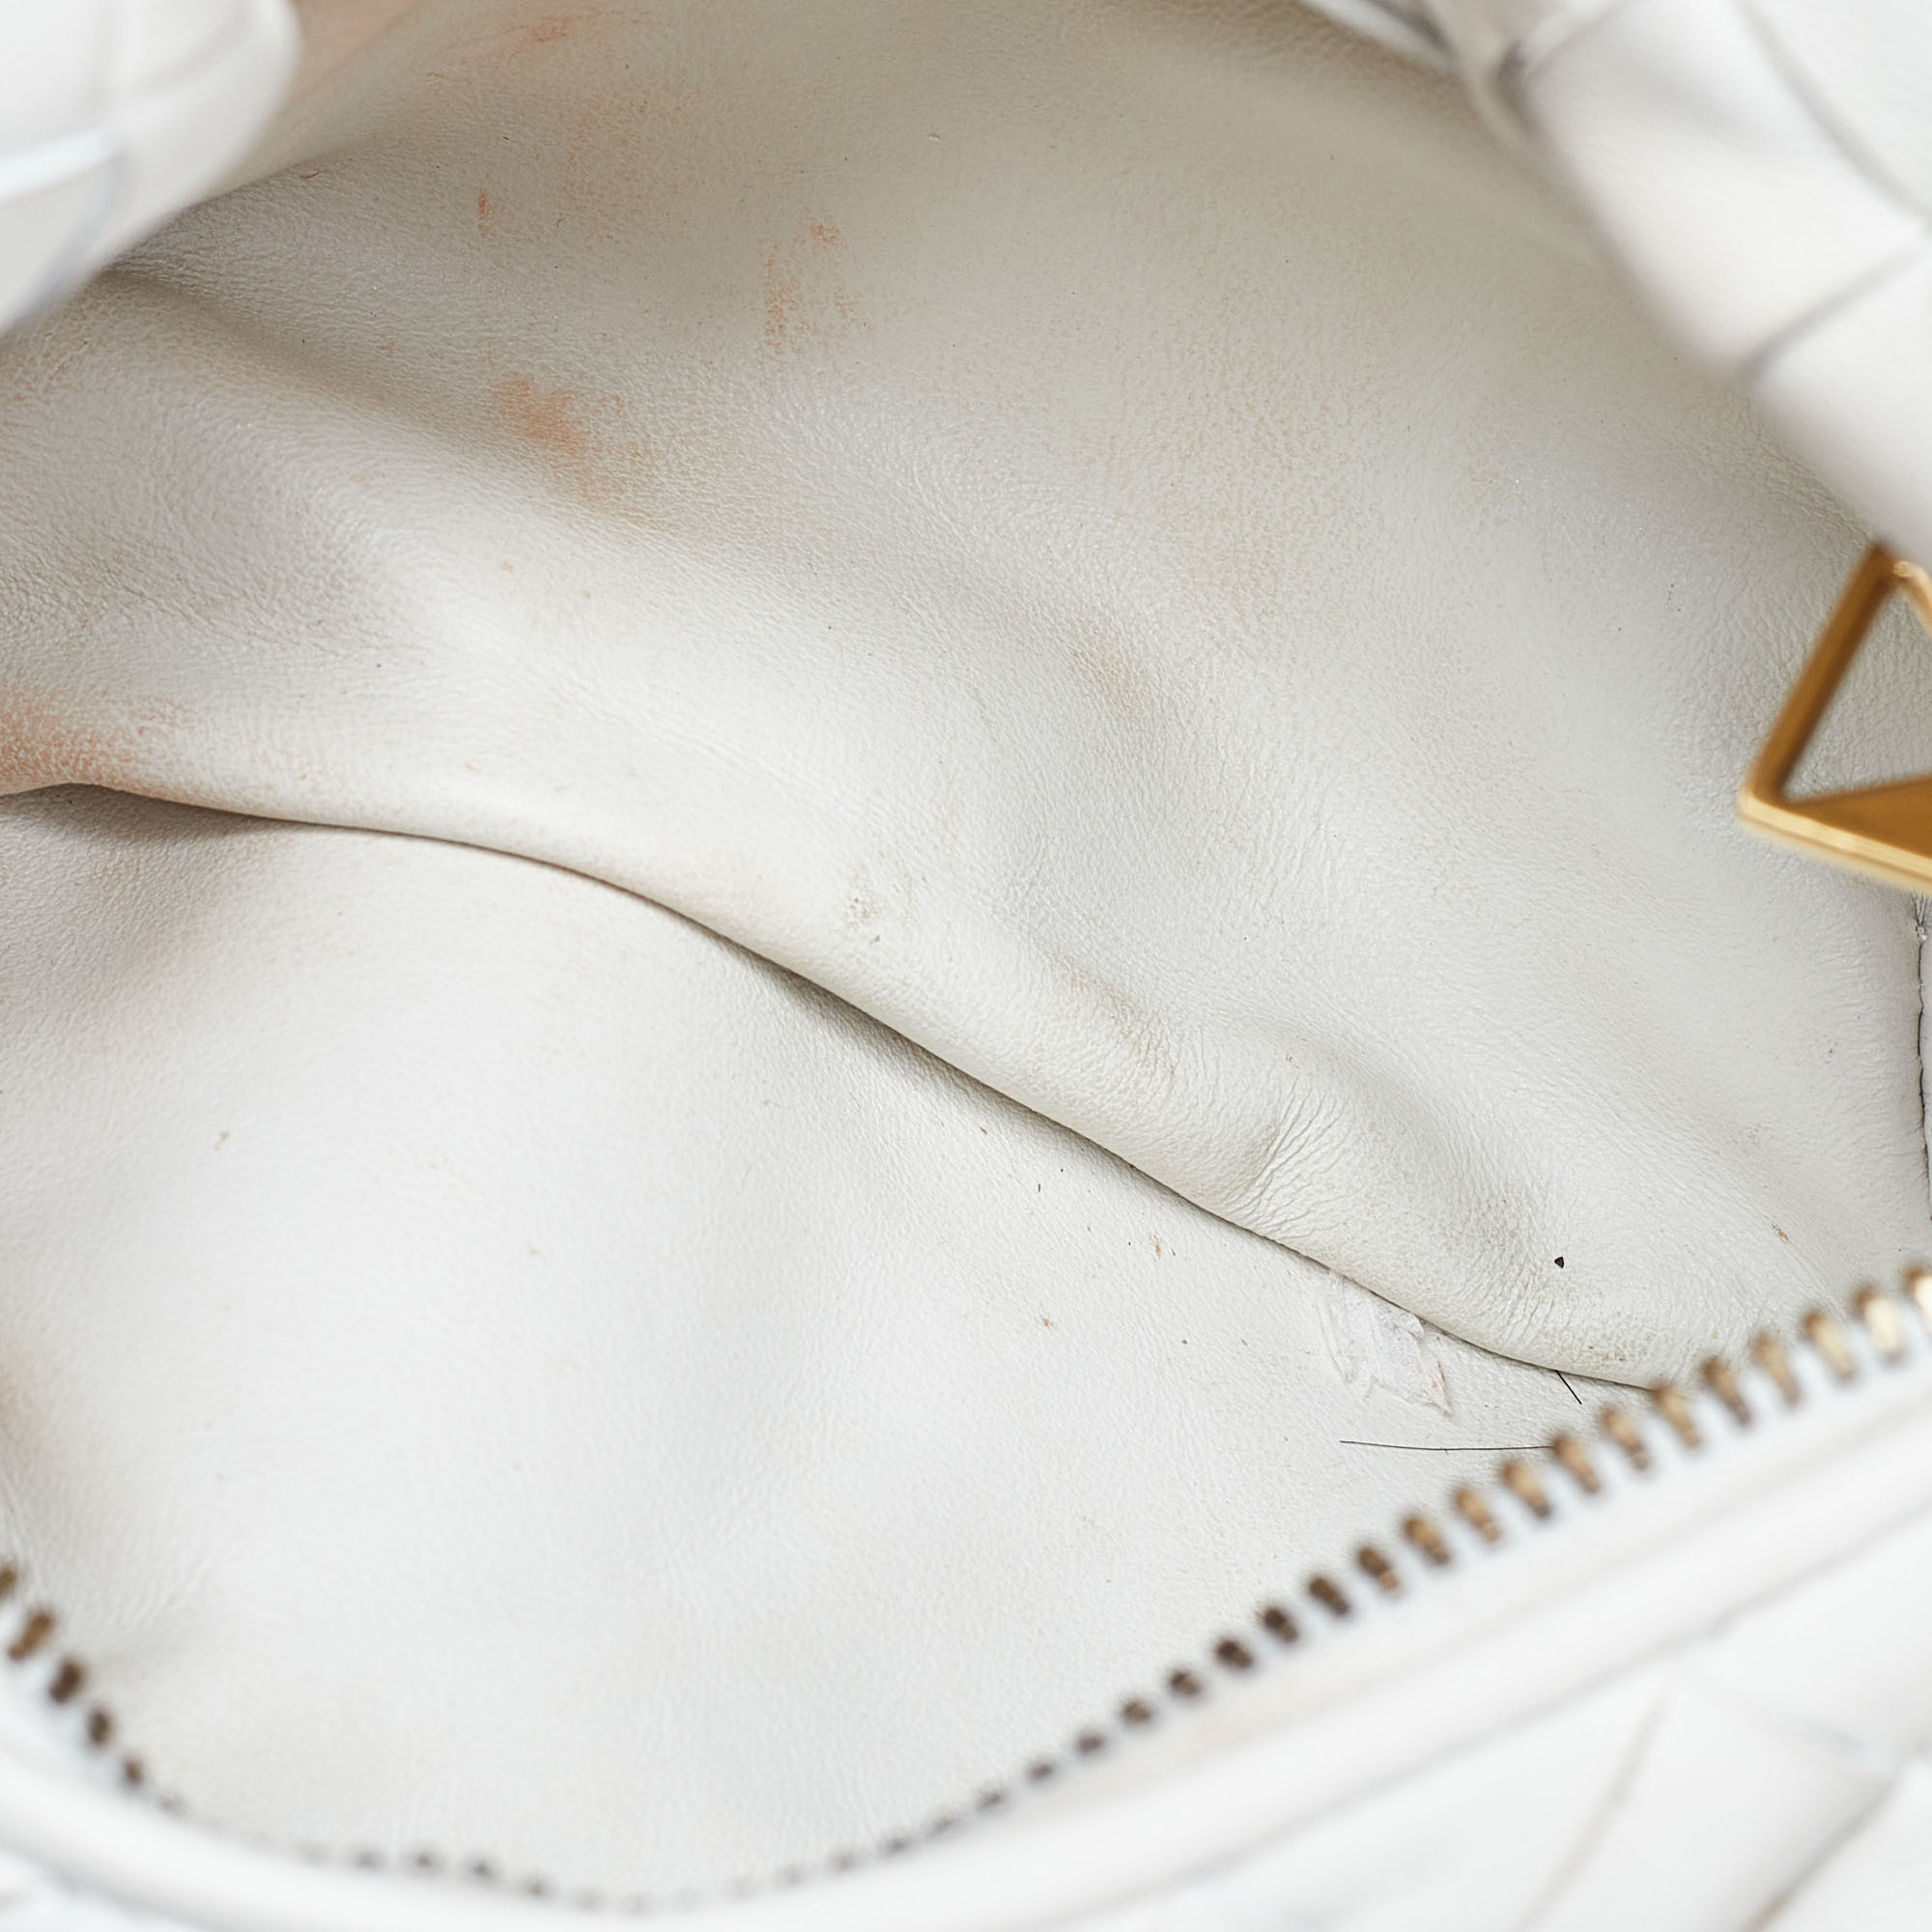 Bottega Veneta White Intrecciato Leather Mini BV Jodie Bag